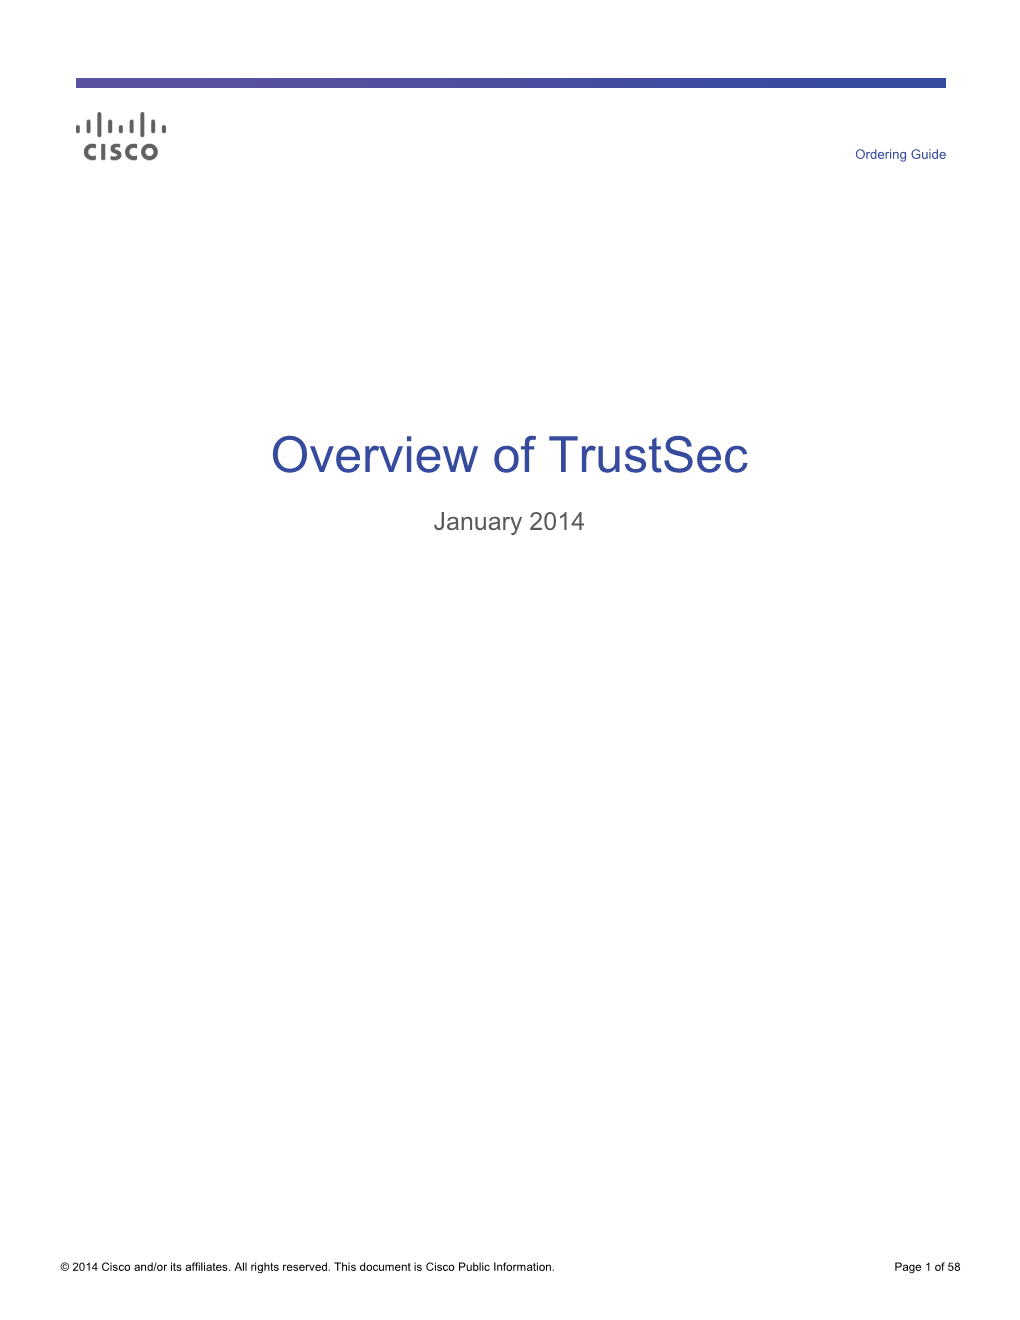 Trustsec Overview